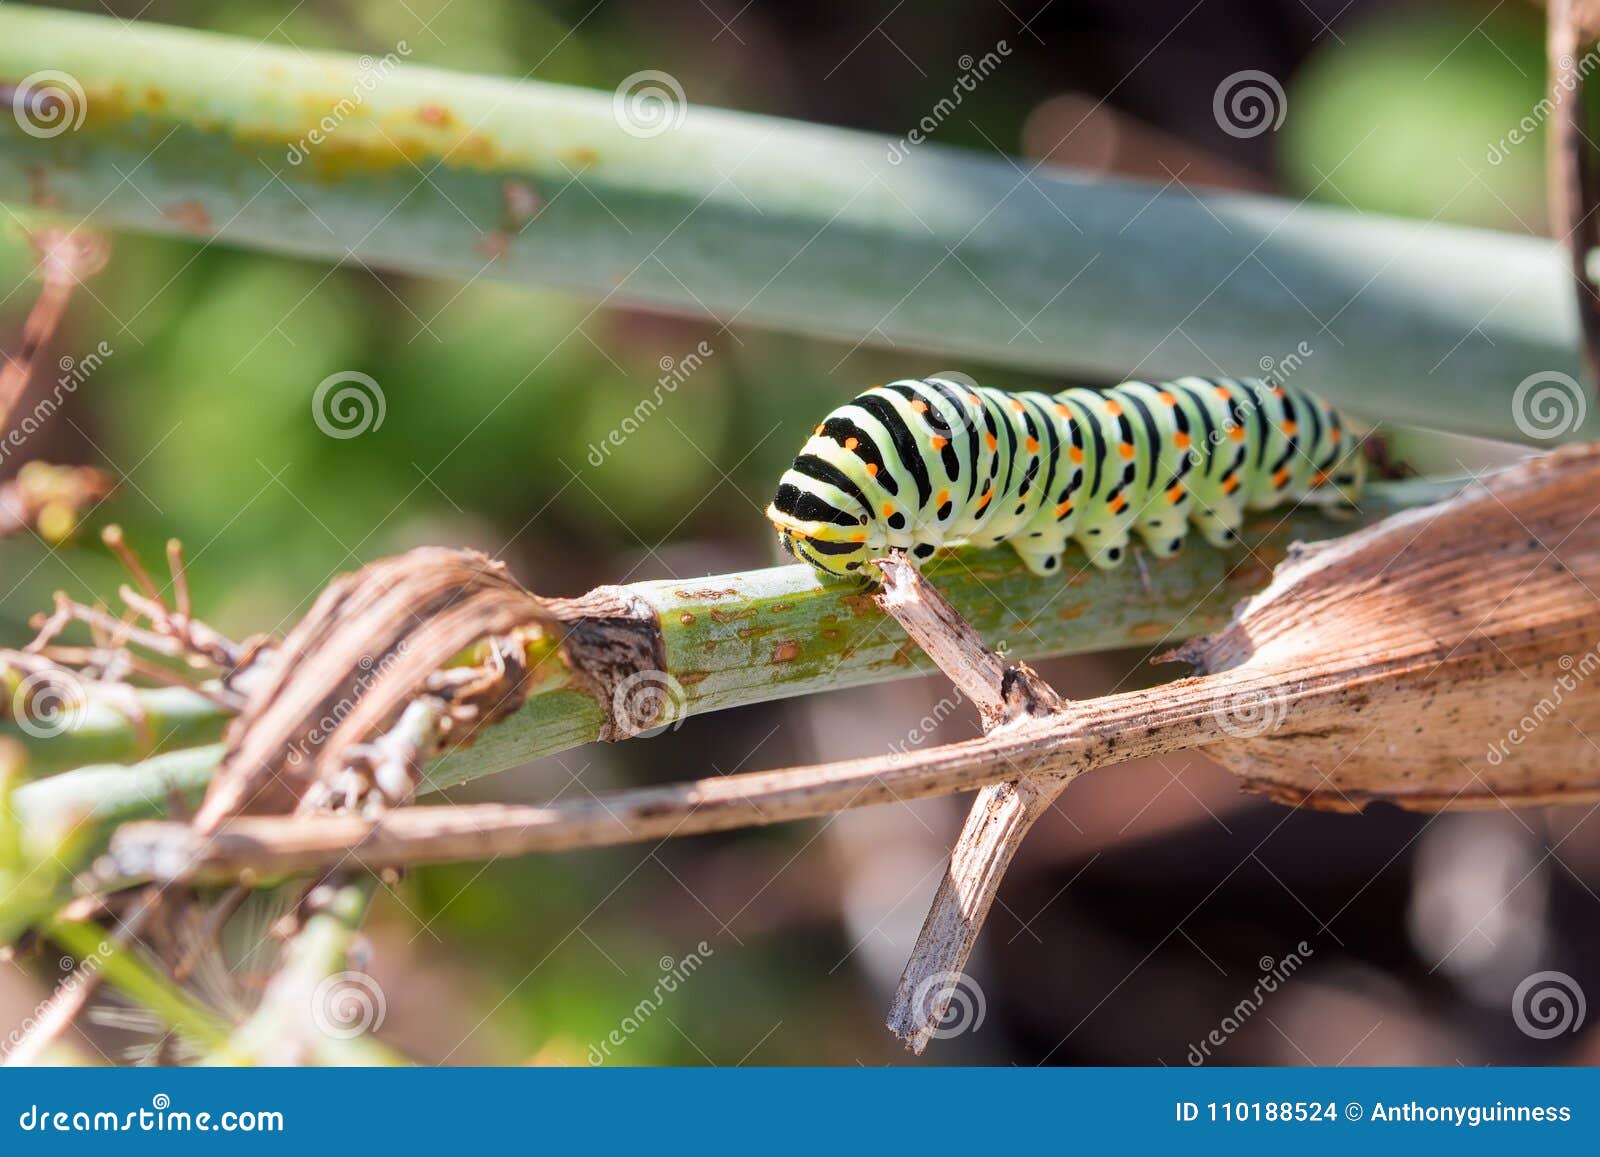 caterpillar of papilio machaon ii